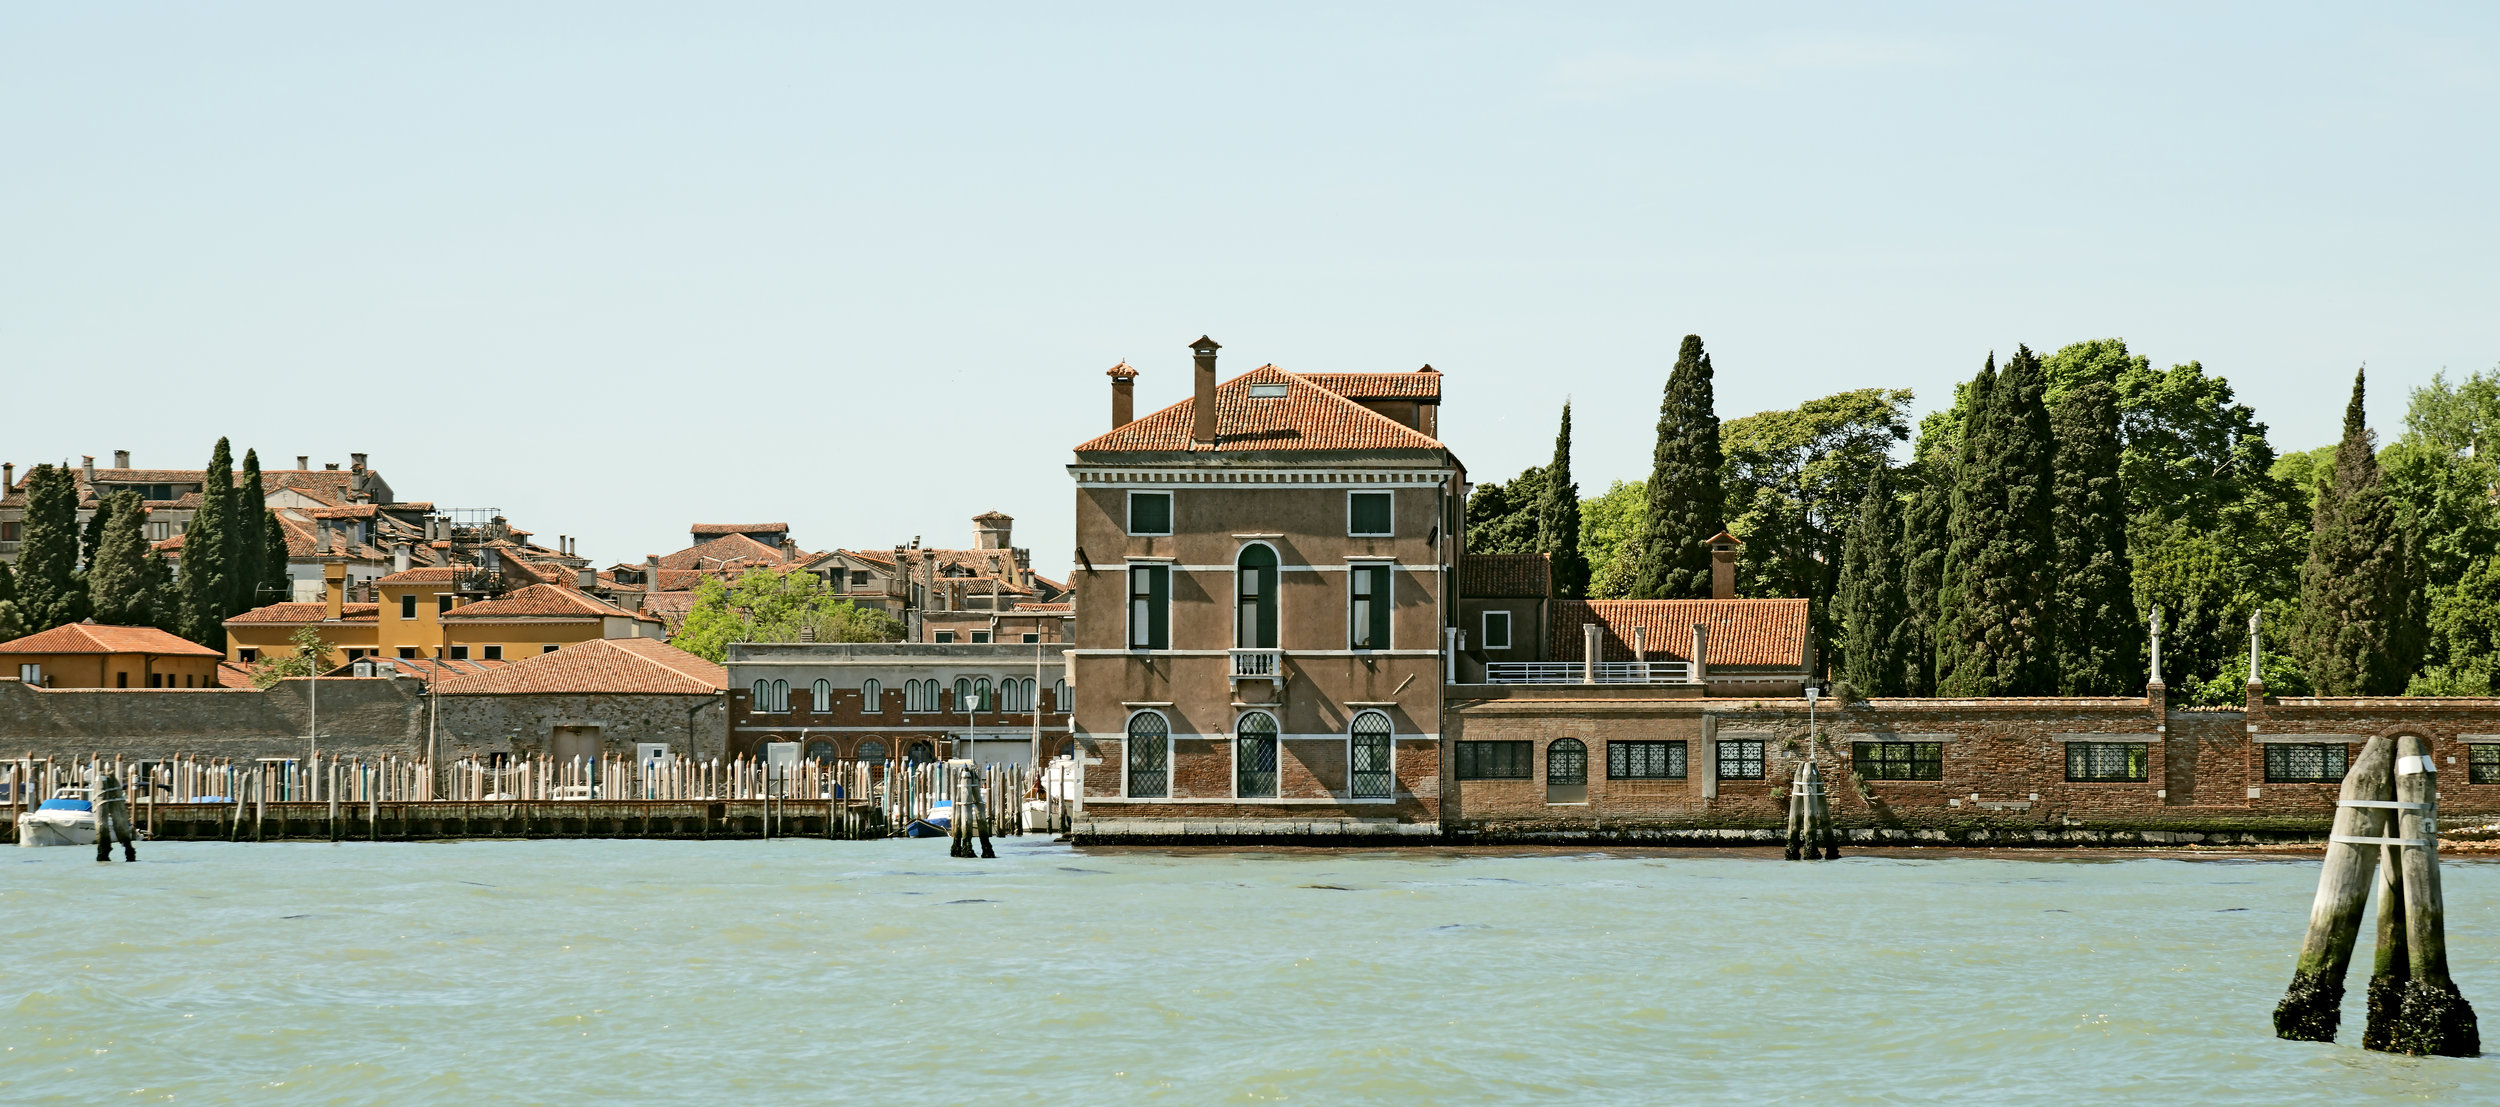 The Casino degli Spiriti, as seen from the water, Venice, Italy (Copy)